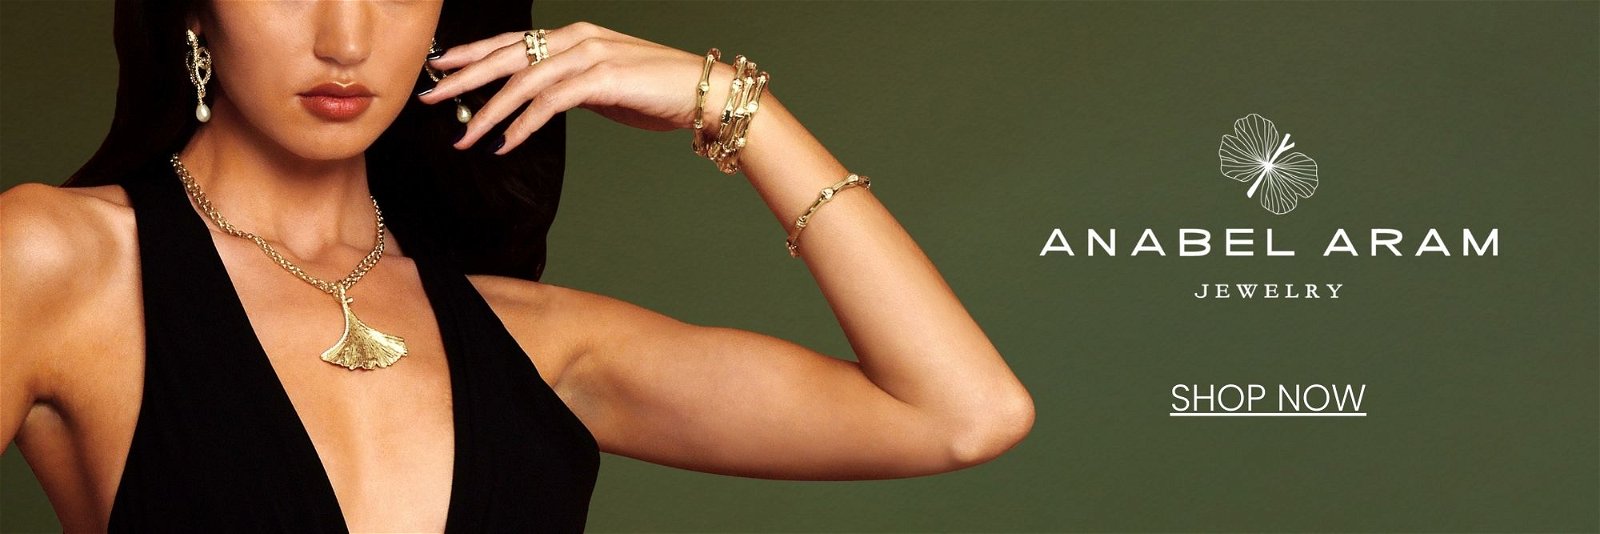 Introducing Anabel Aram Jewelry